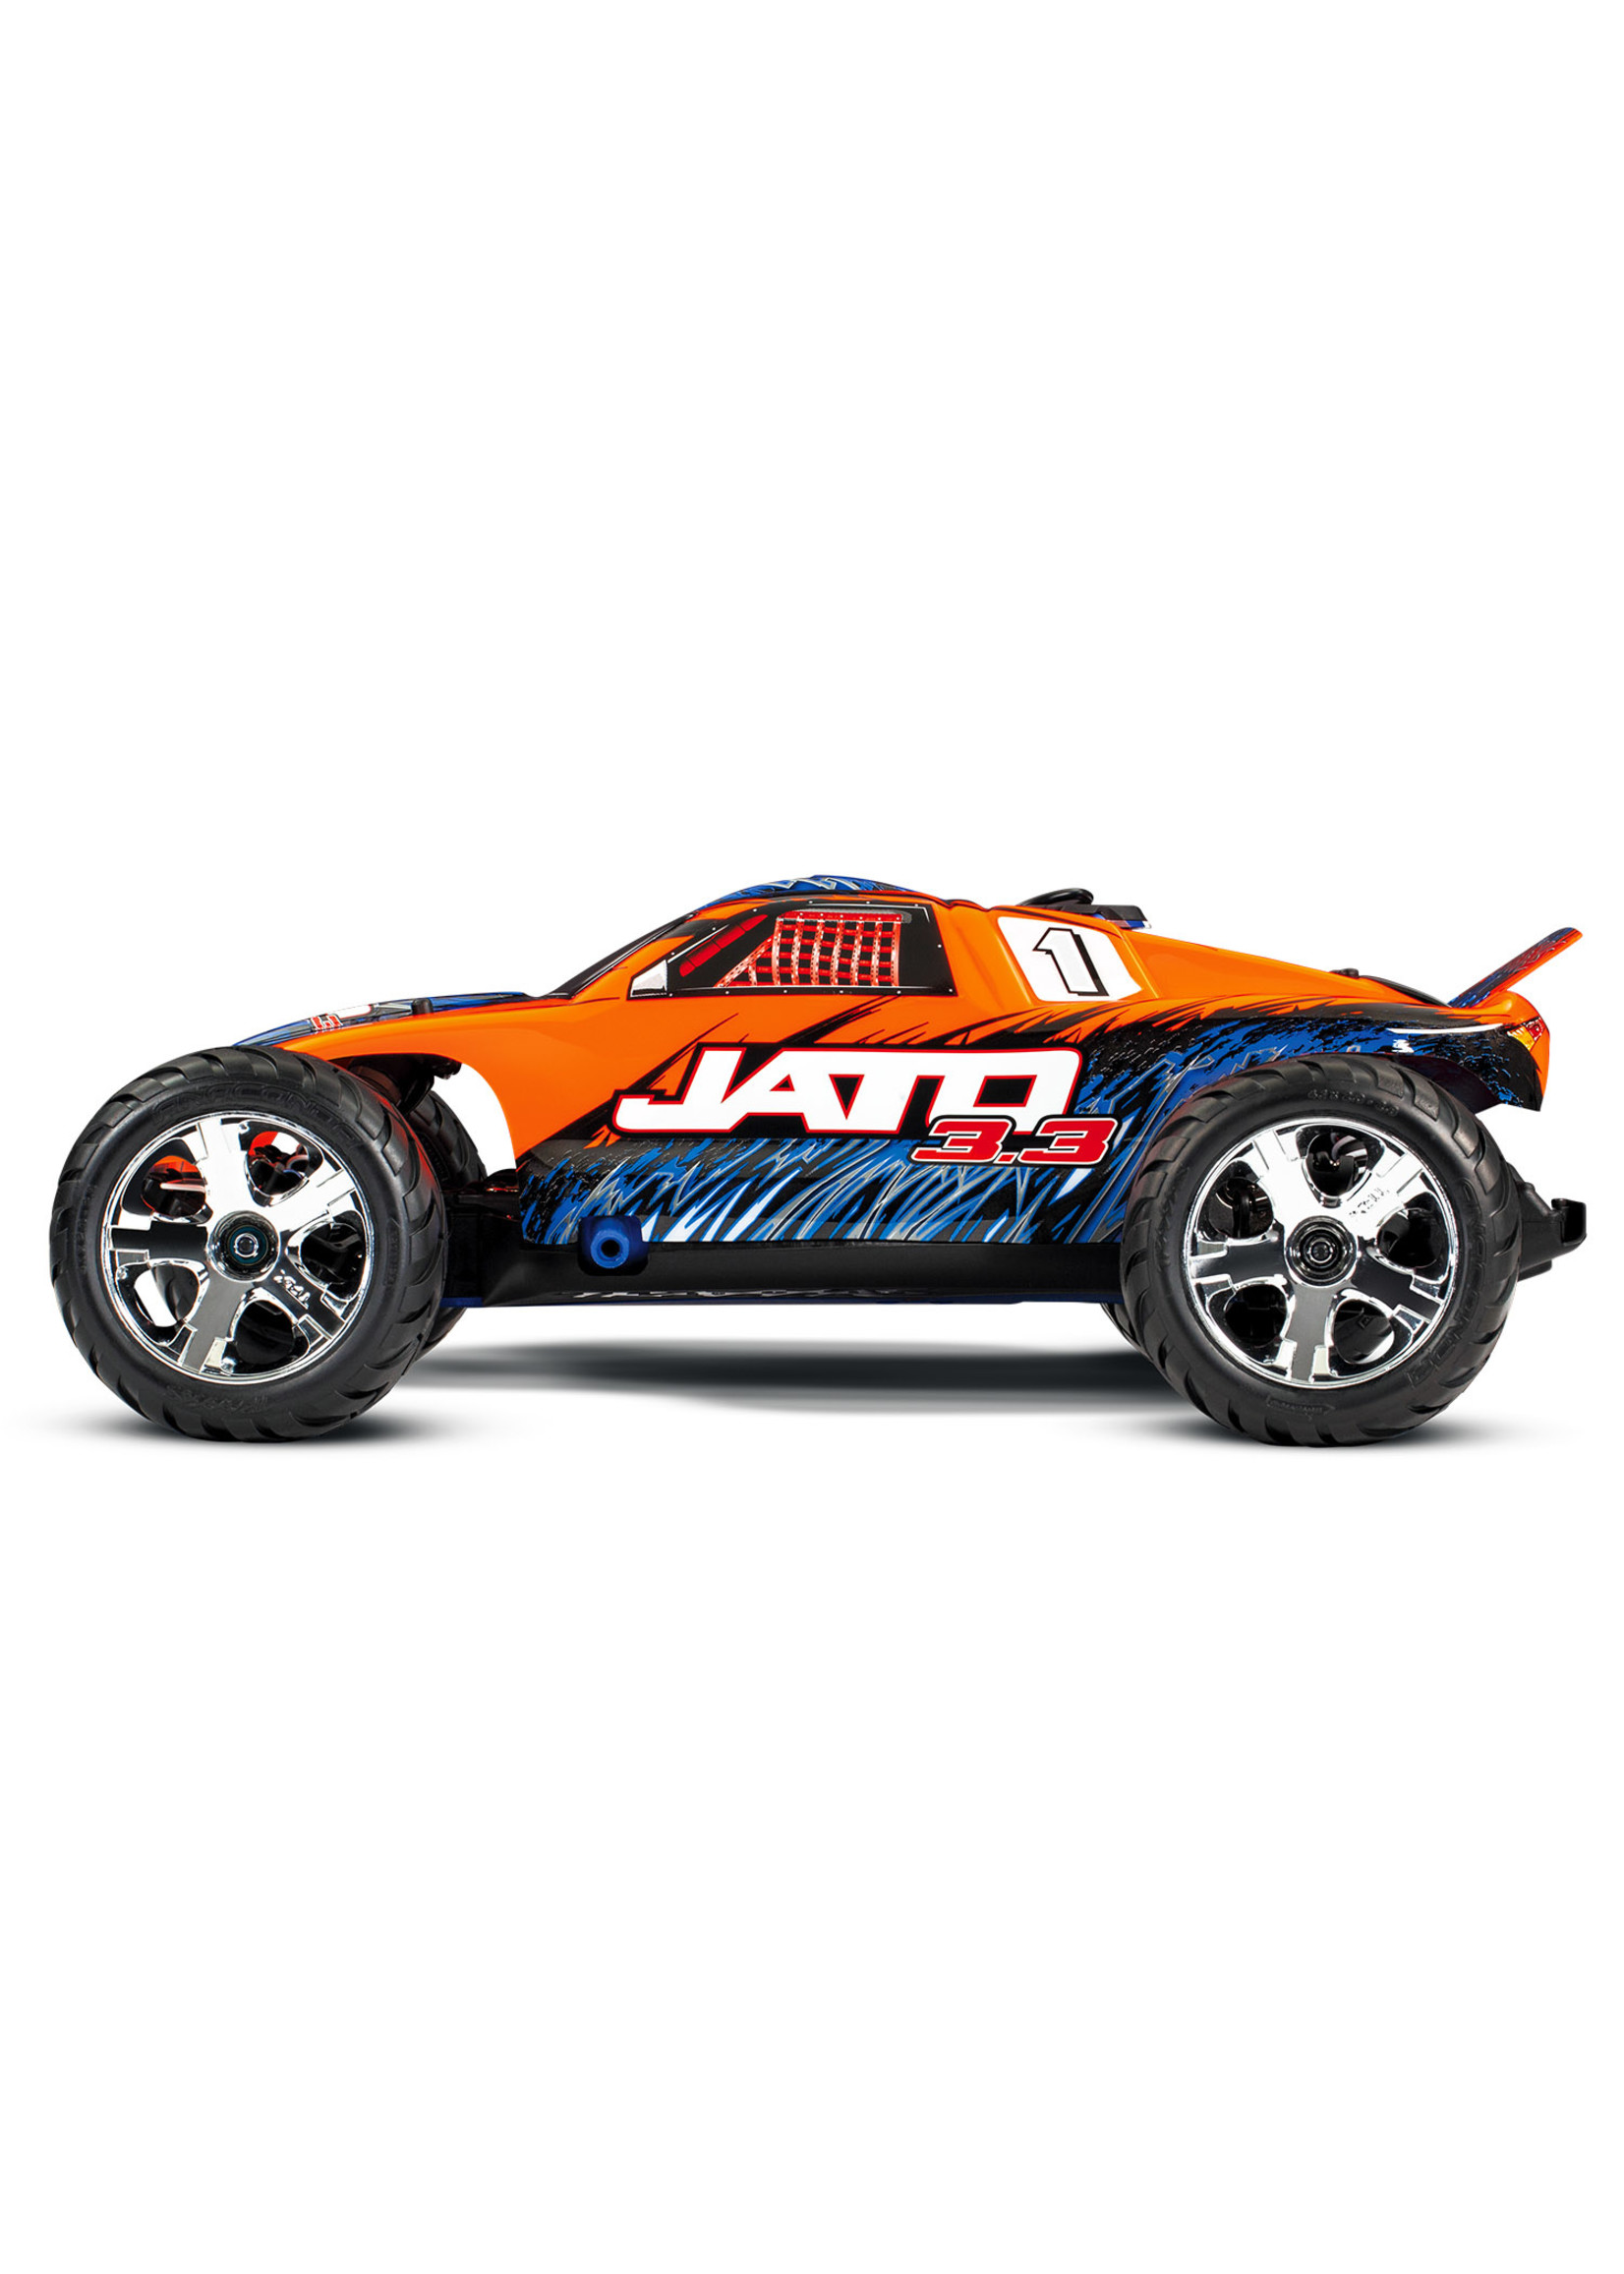 Traxxas 1/10 Jato 3.3 2WD Nitro Stadium Truck - Orange